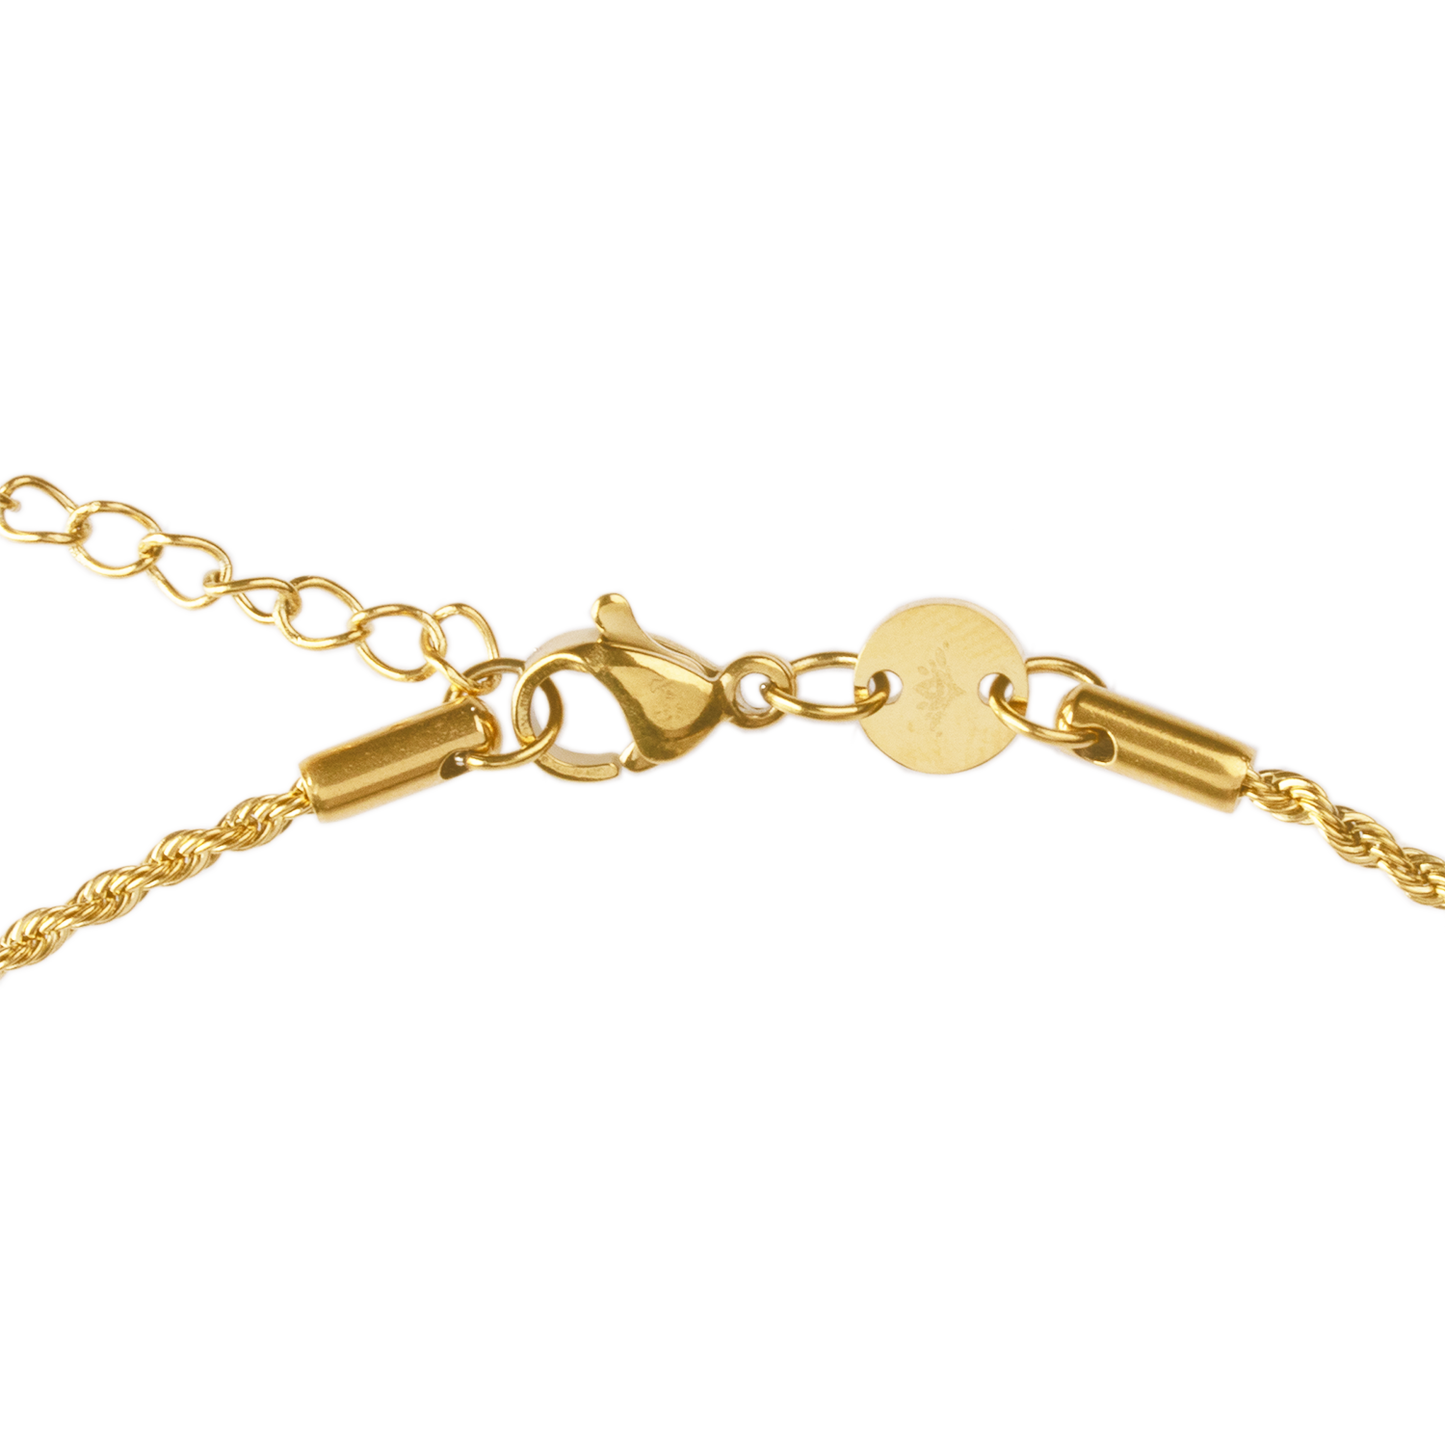 Libra Necklace Gold